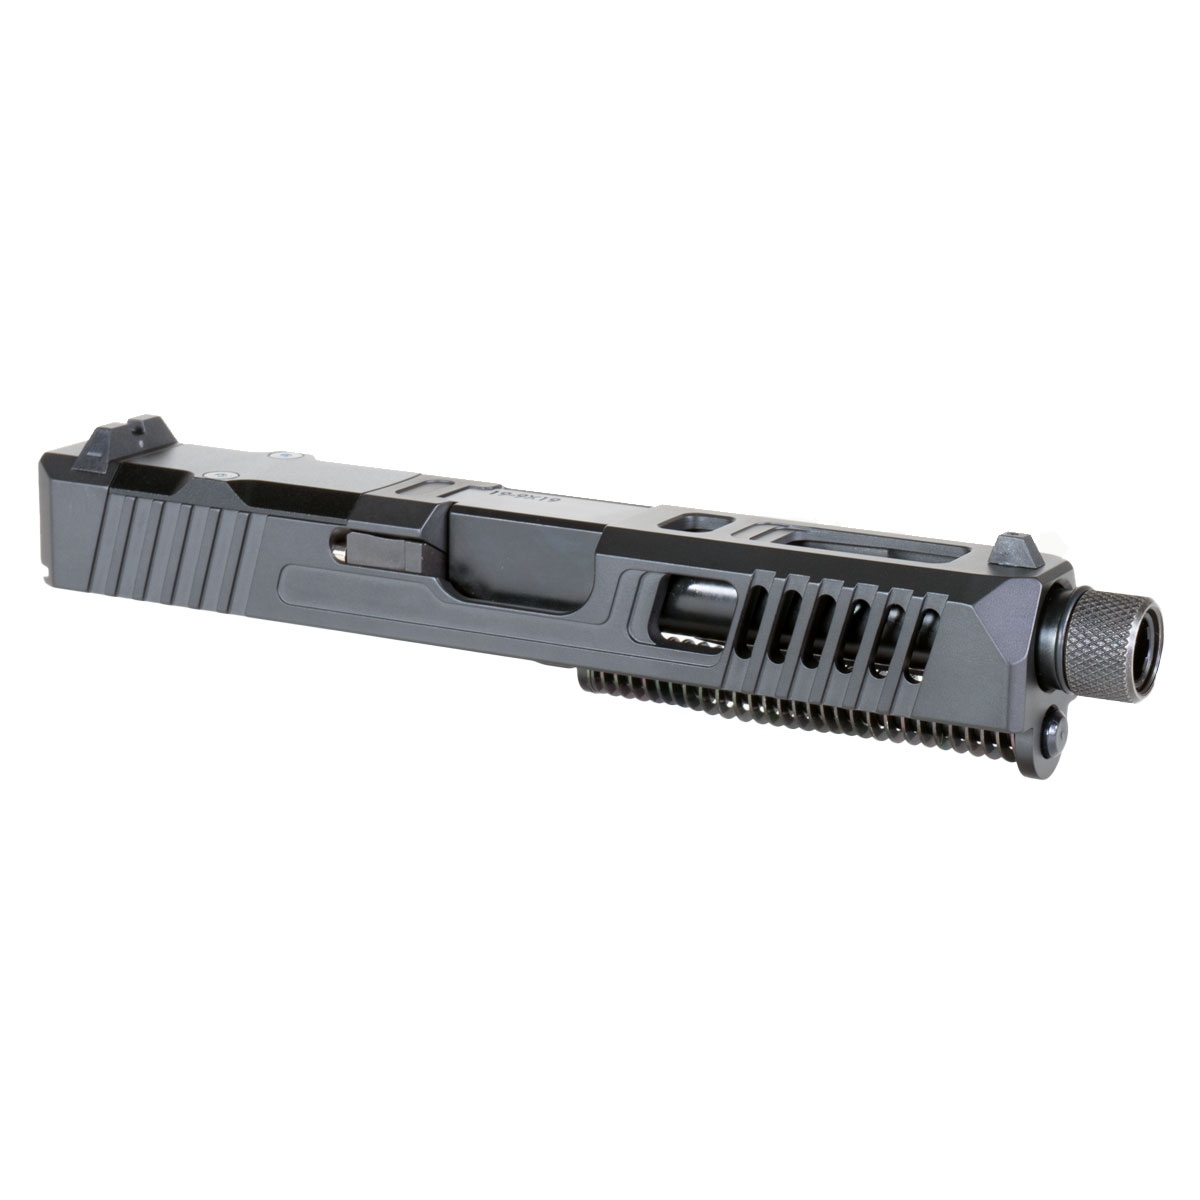 DTT 'Agartha' 9mm Complete Slide Kit - Glock 19 Gen 1-3 Compatible